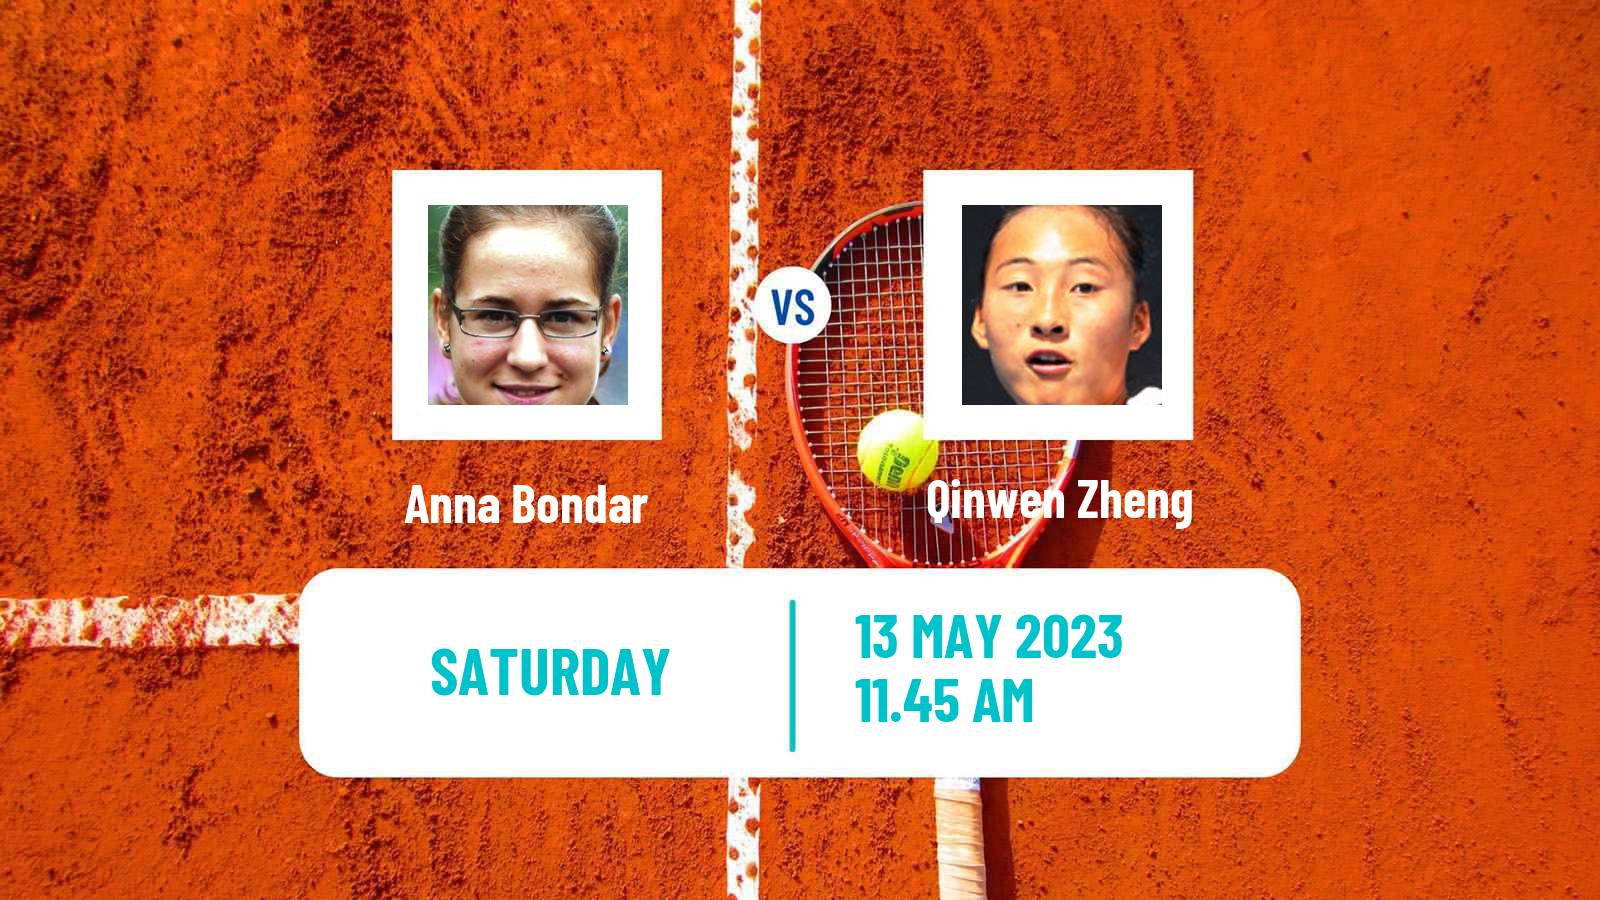 Tennis WTA Roma Anna Bondar - Qinwen Zheng